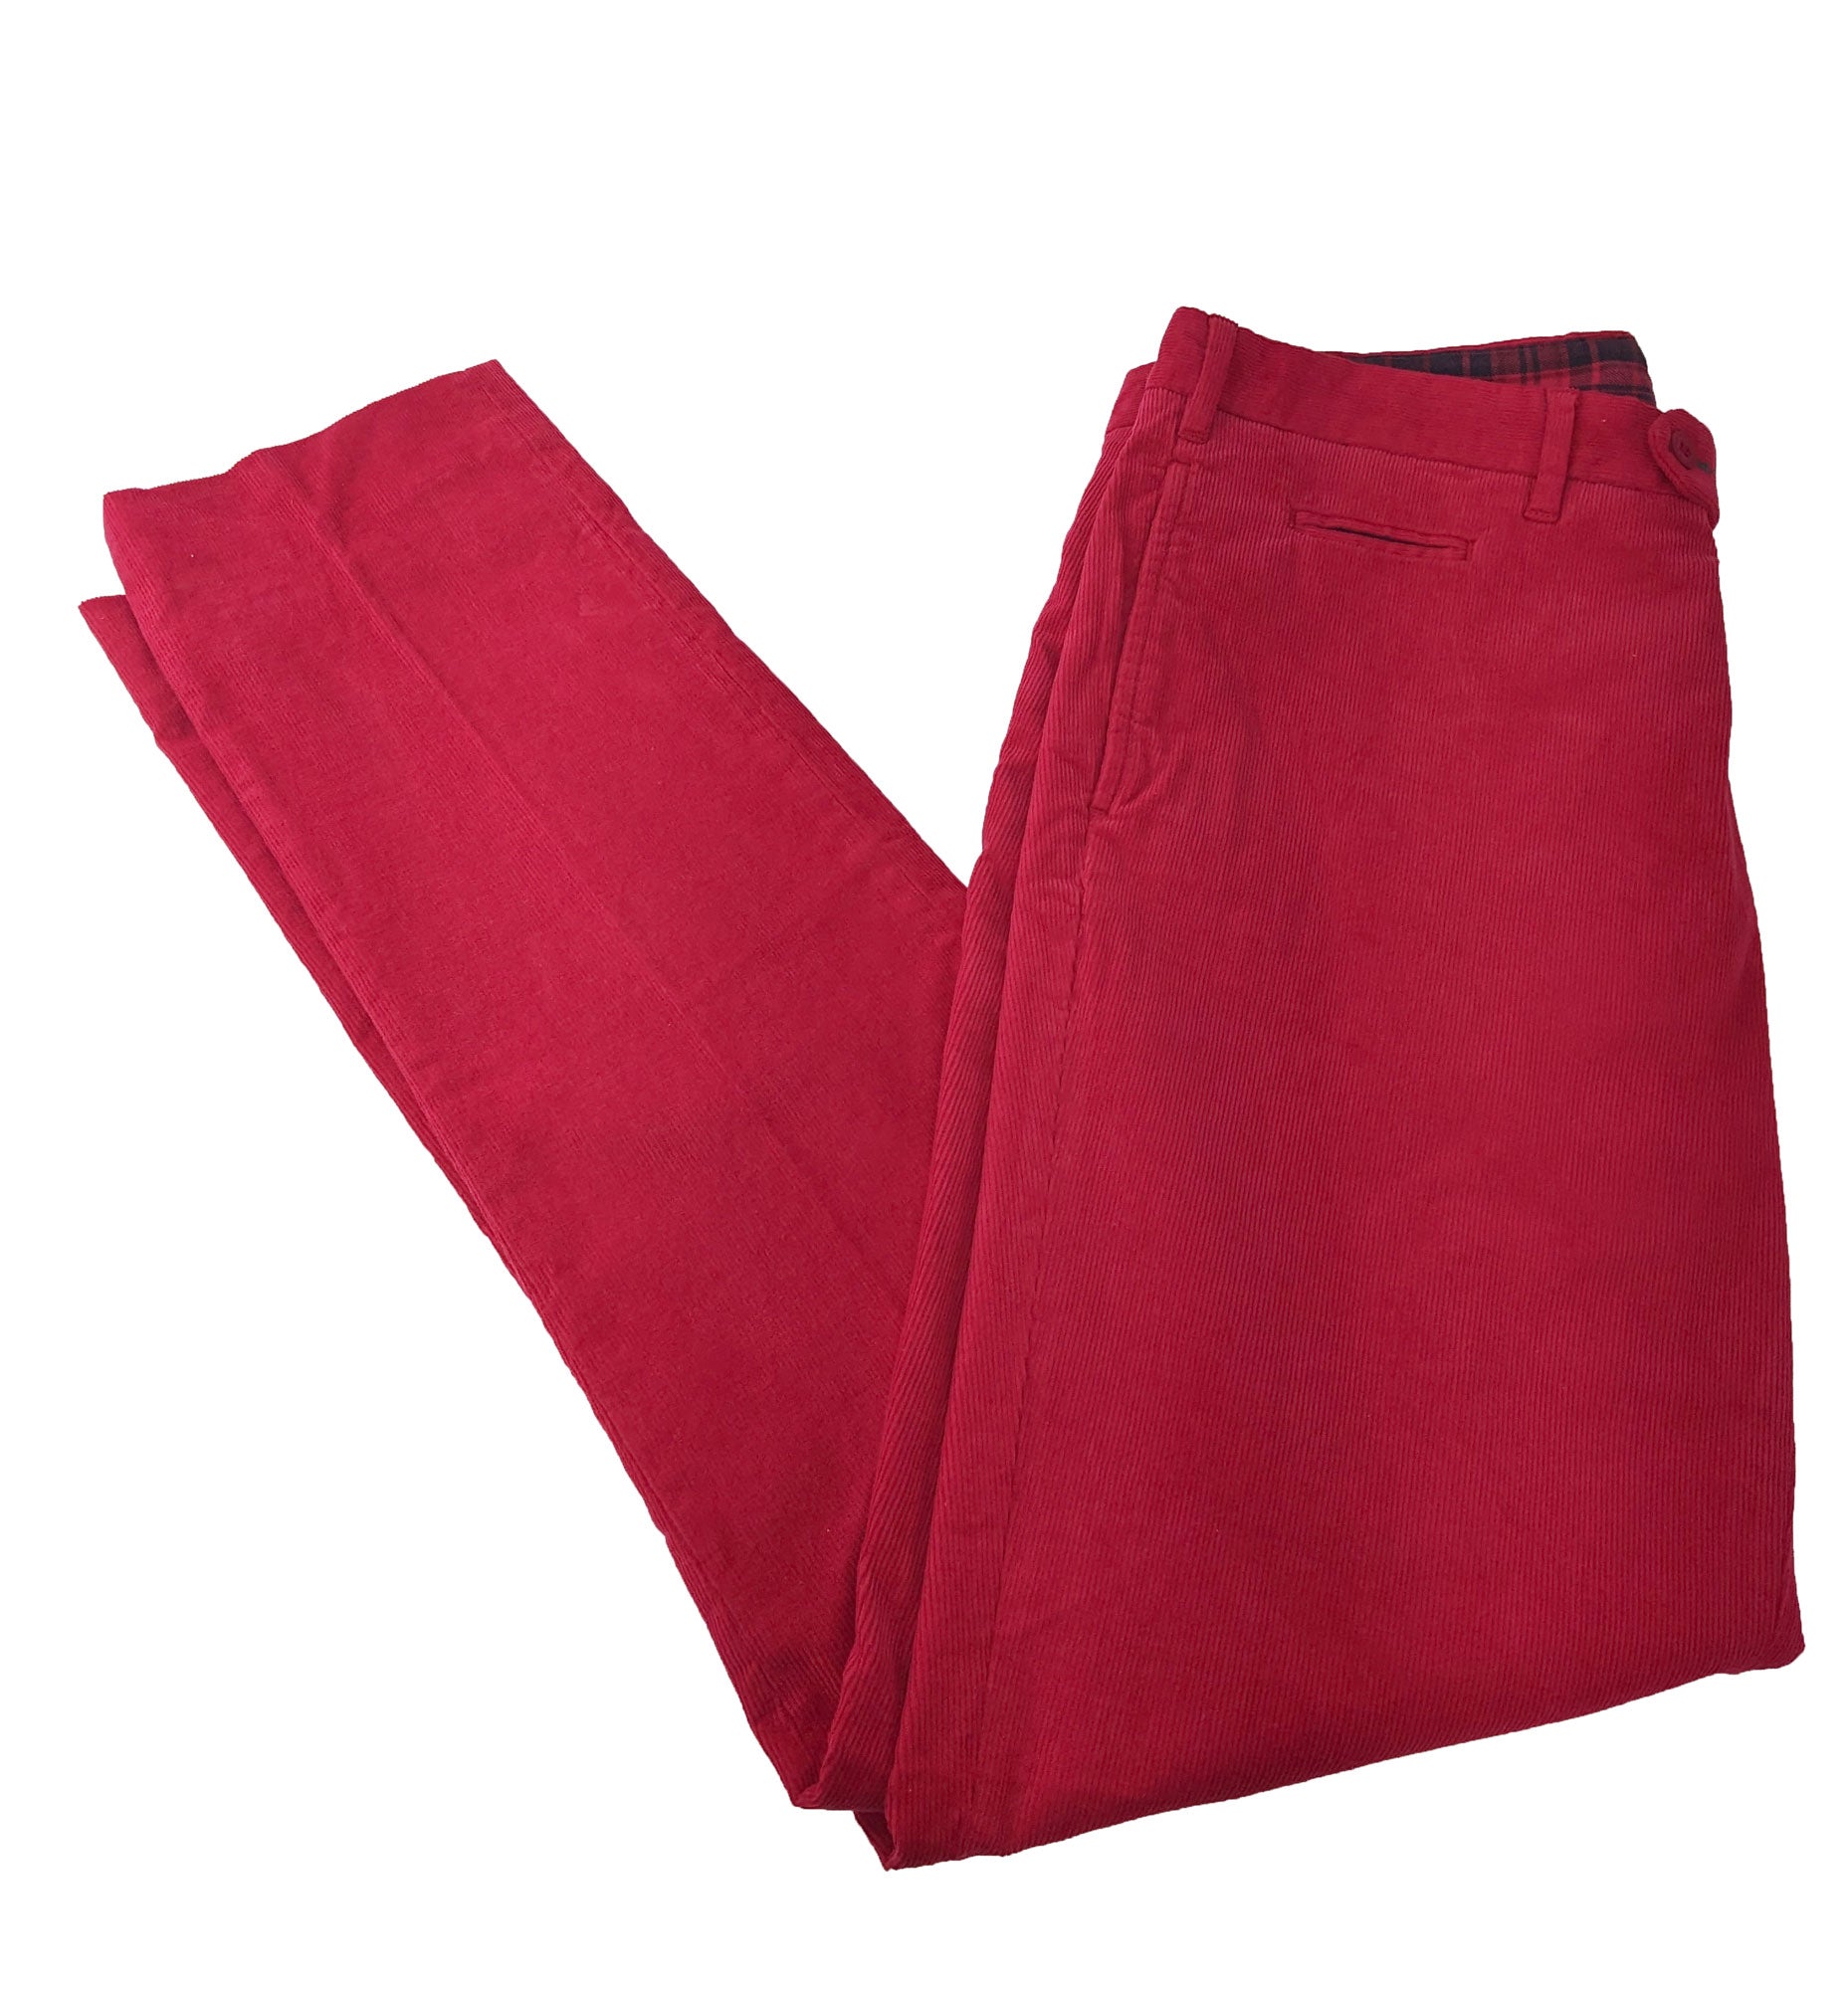 Massimo Dutti Corduroy Slim Fit Leg Pants Trousers Size 34 UK 6 US 2 | eBay